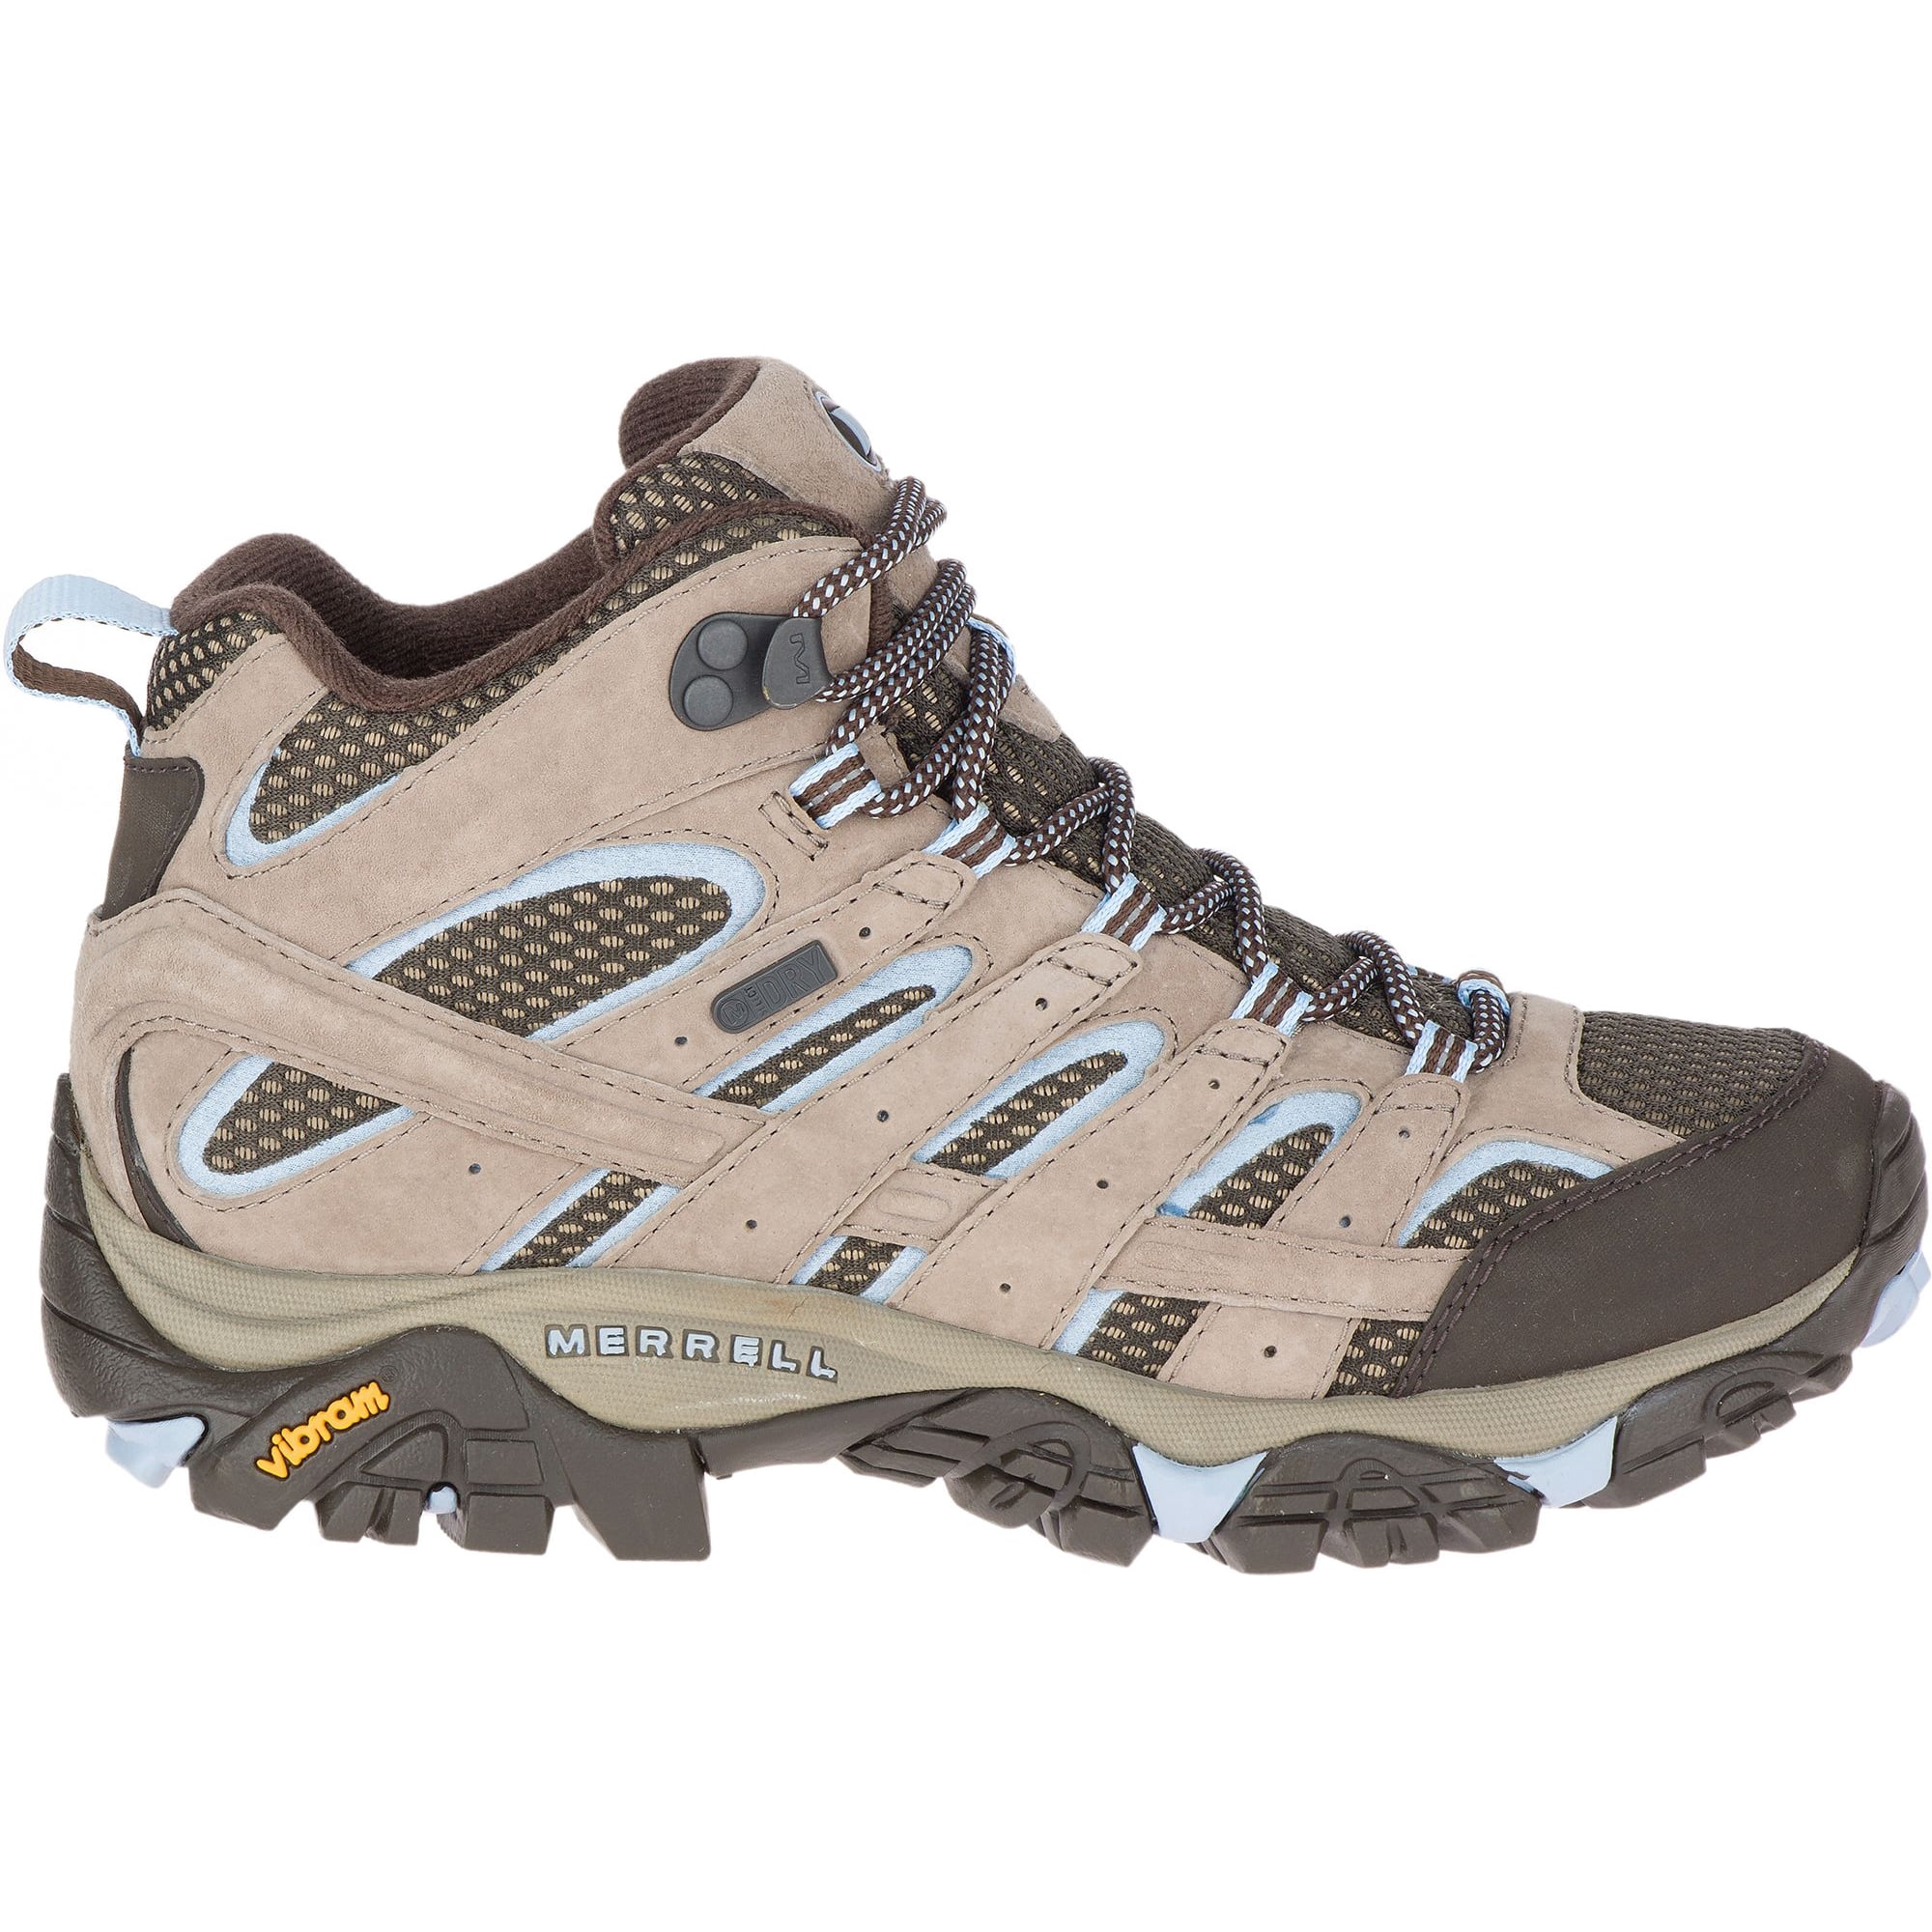 Merrell Moab 2 GTX Hiking Shoes -